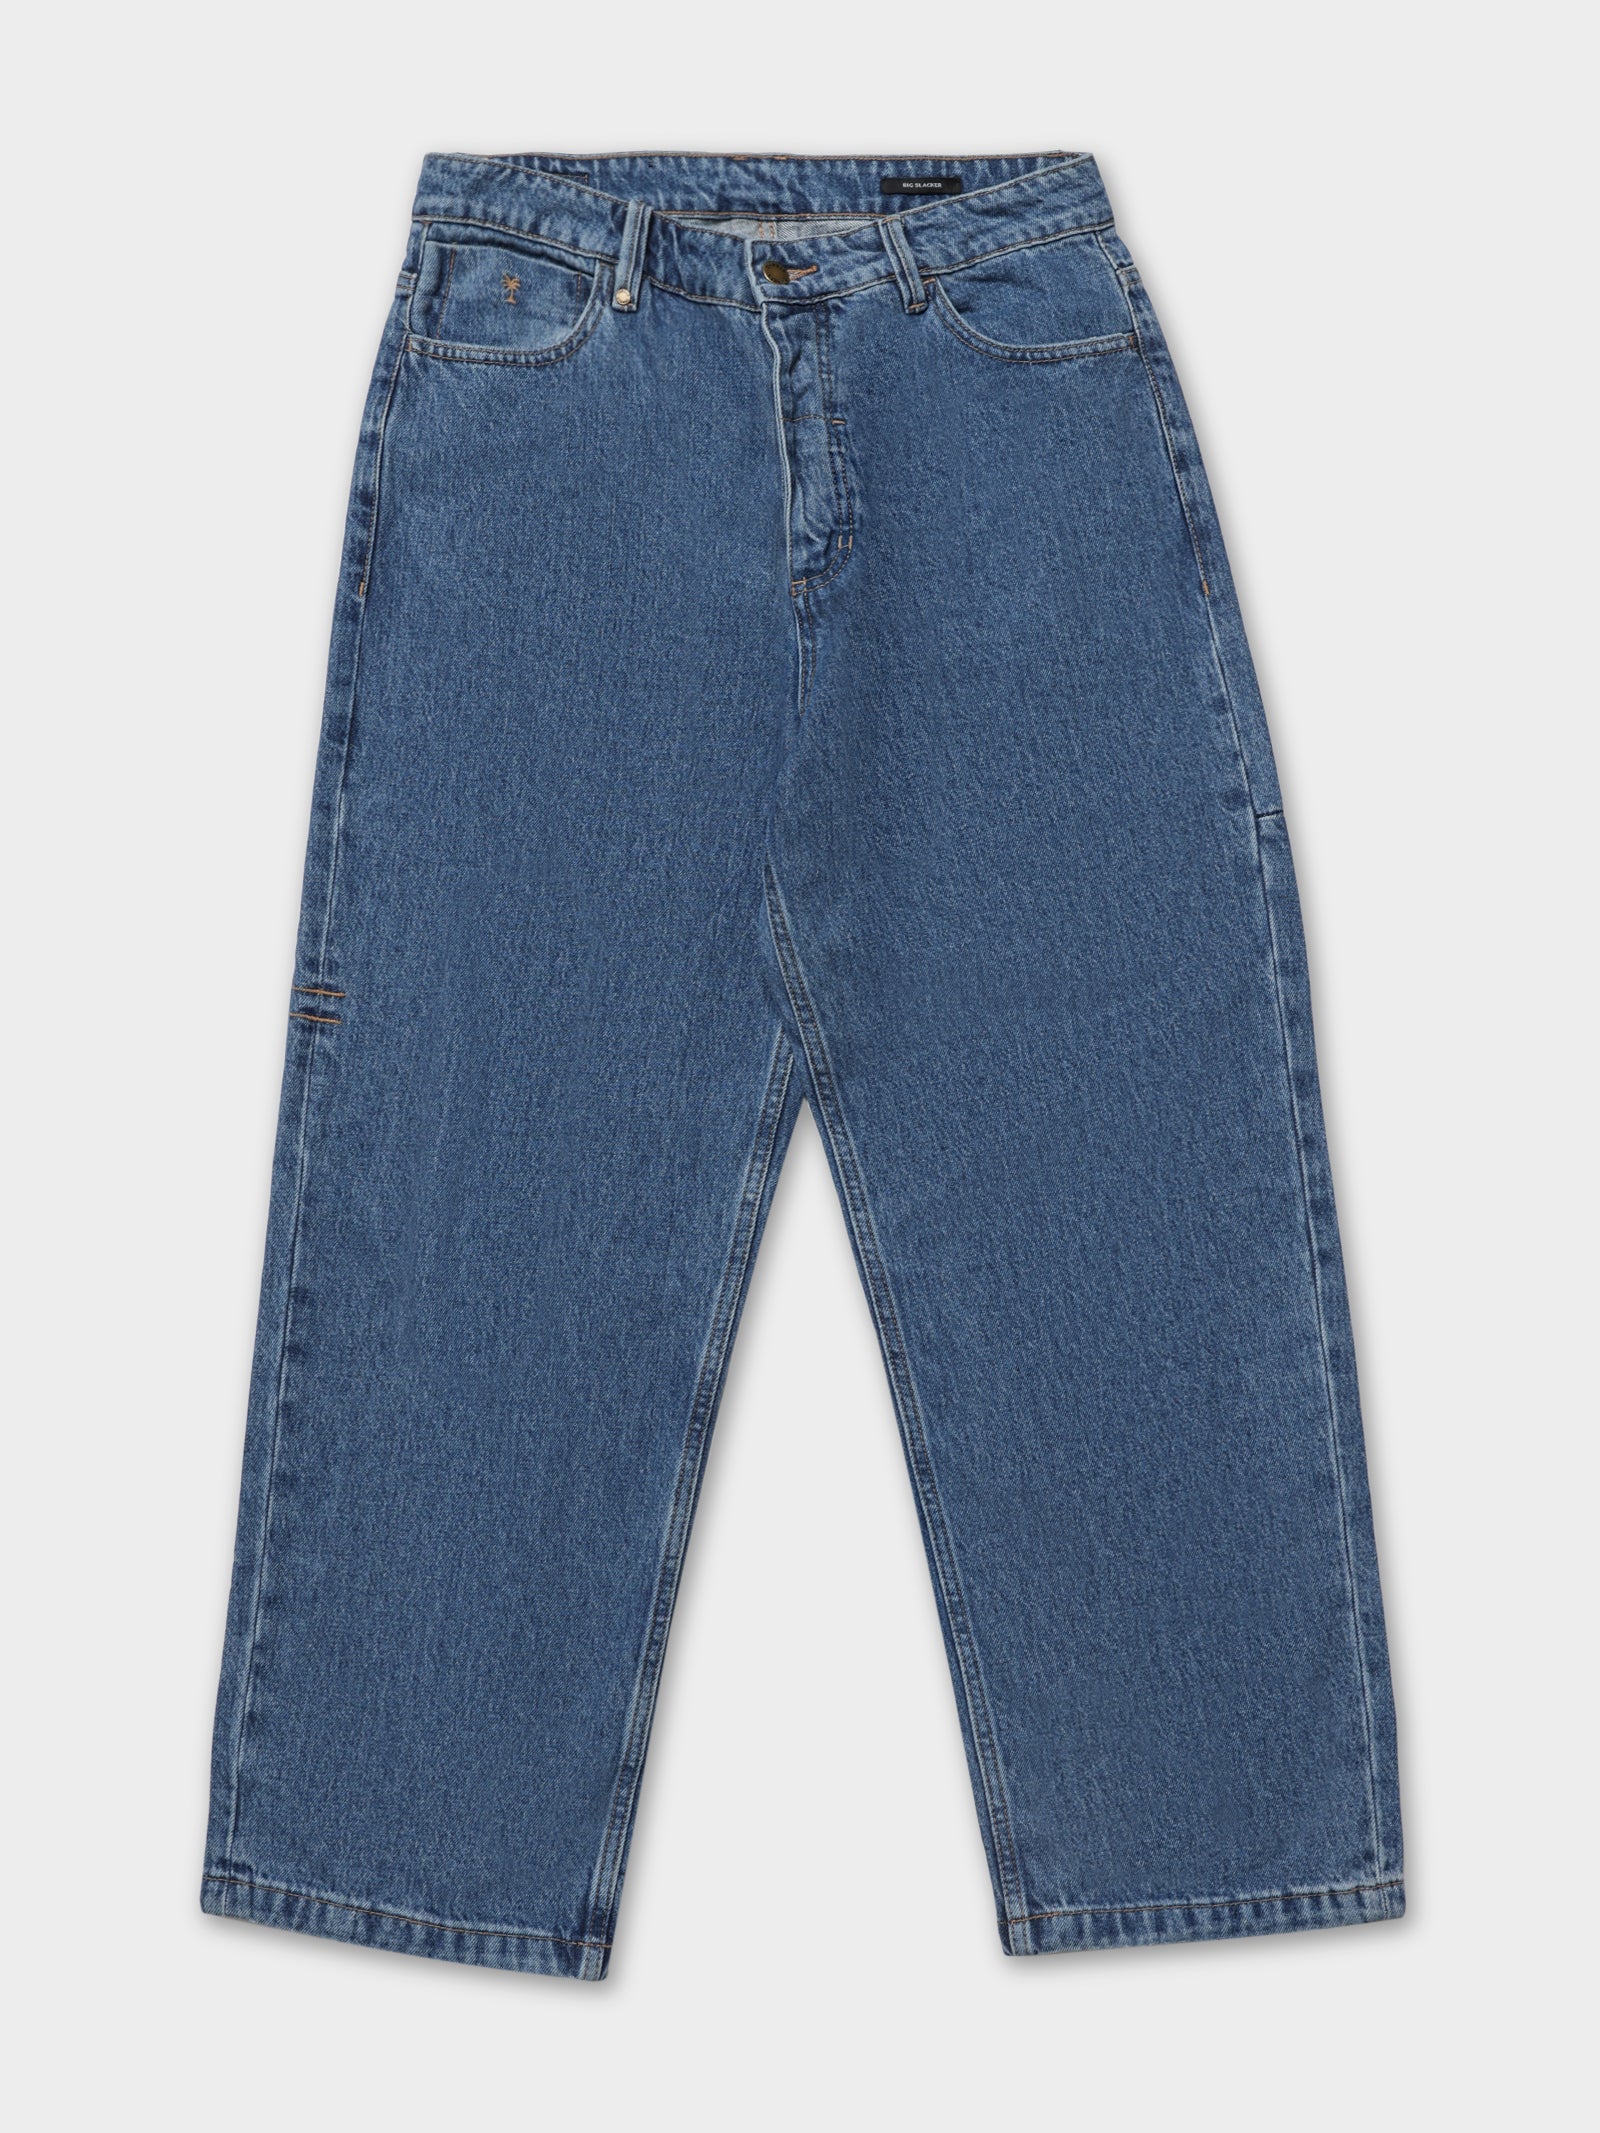 Big Slacker Denim Jeans in Highway Blue - Glue Store NZ